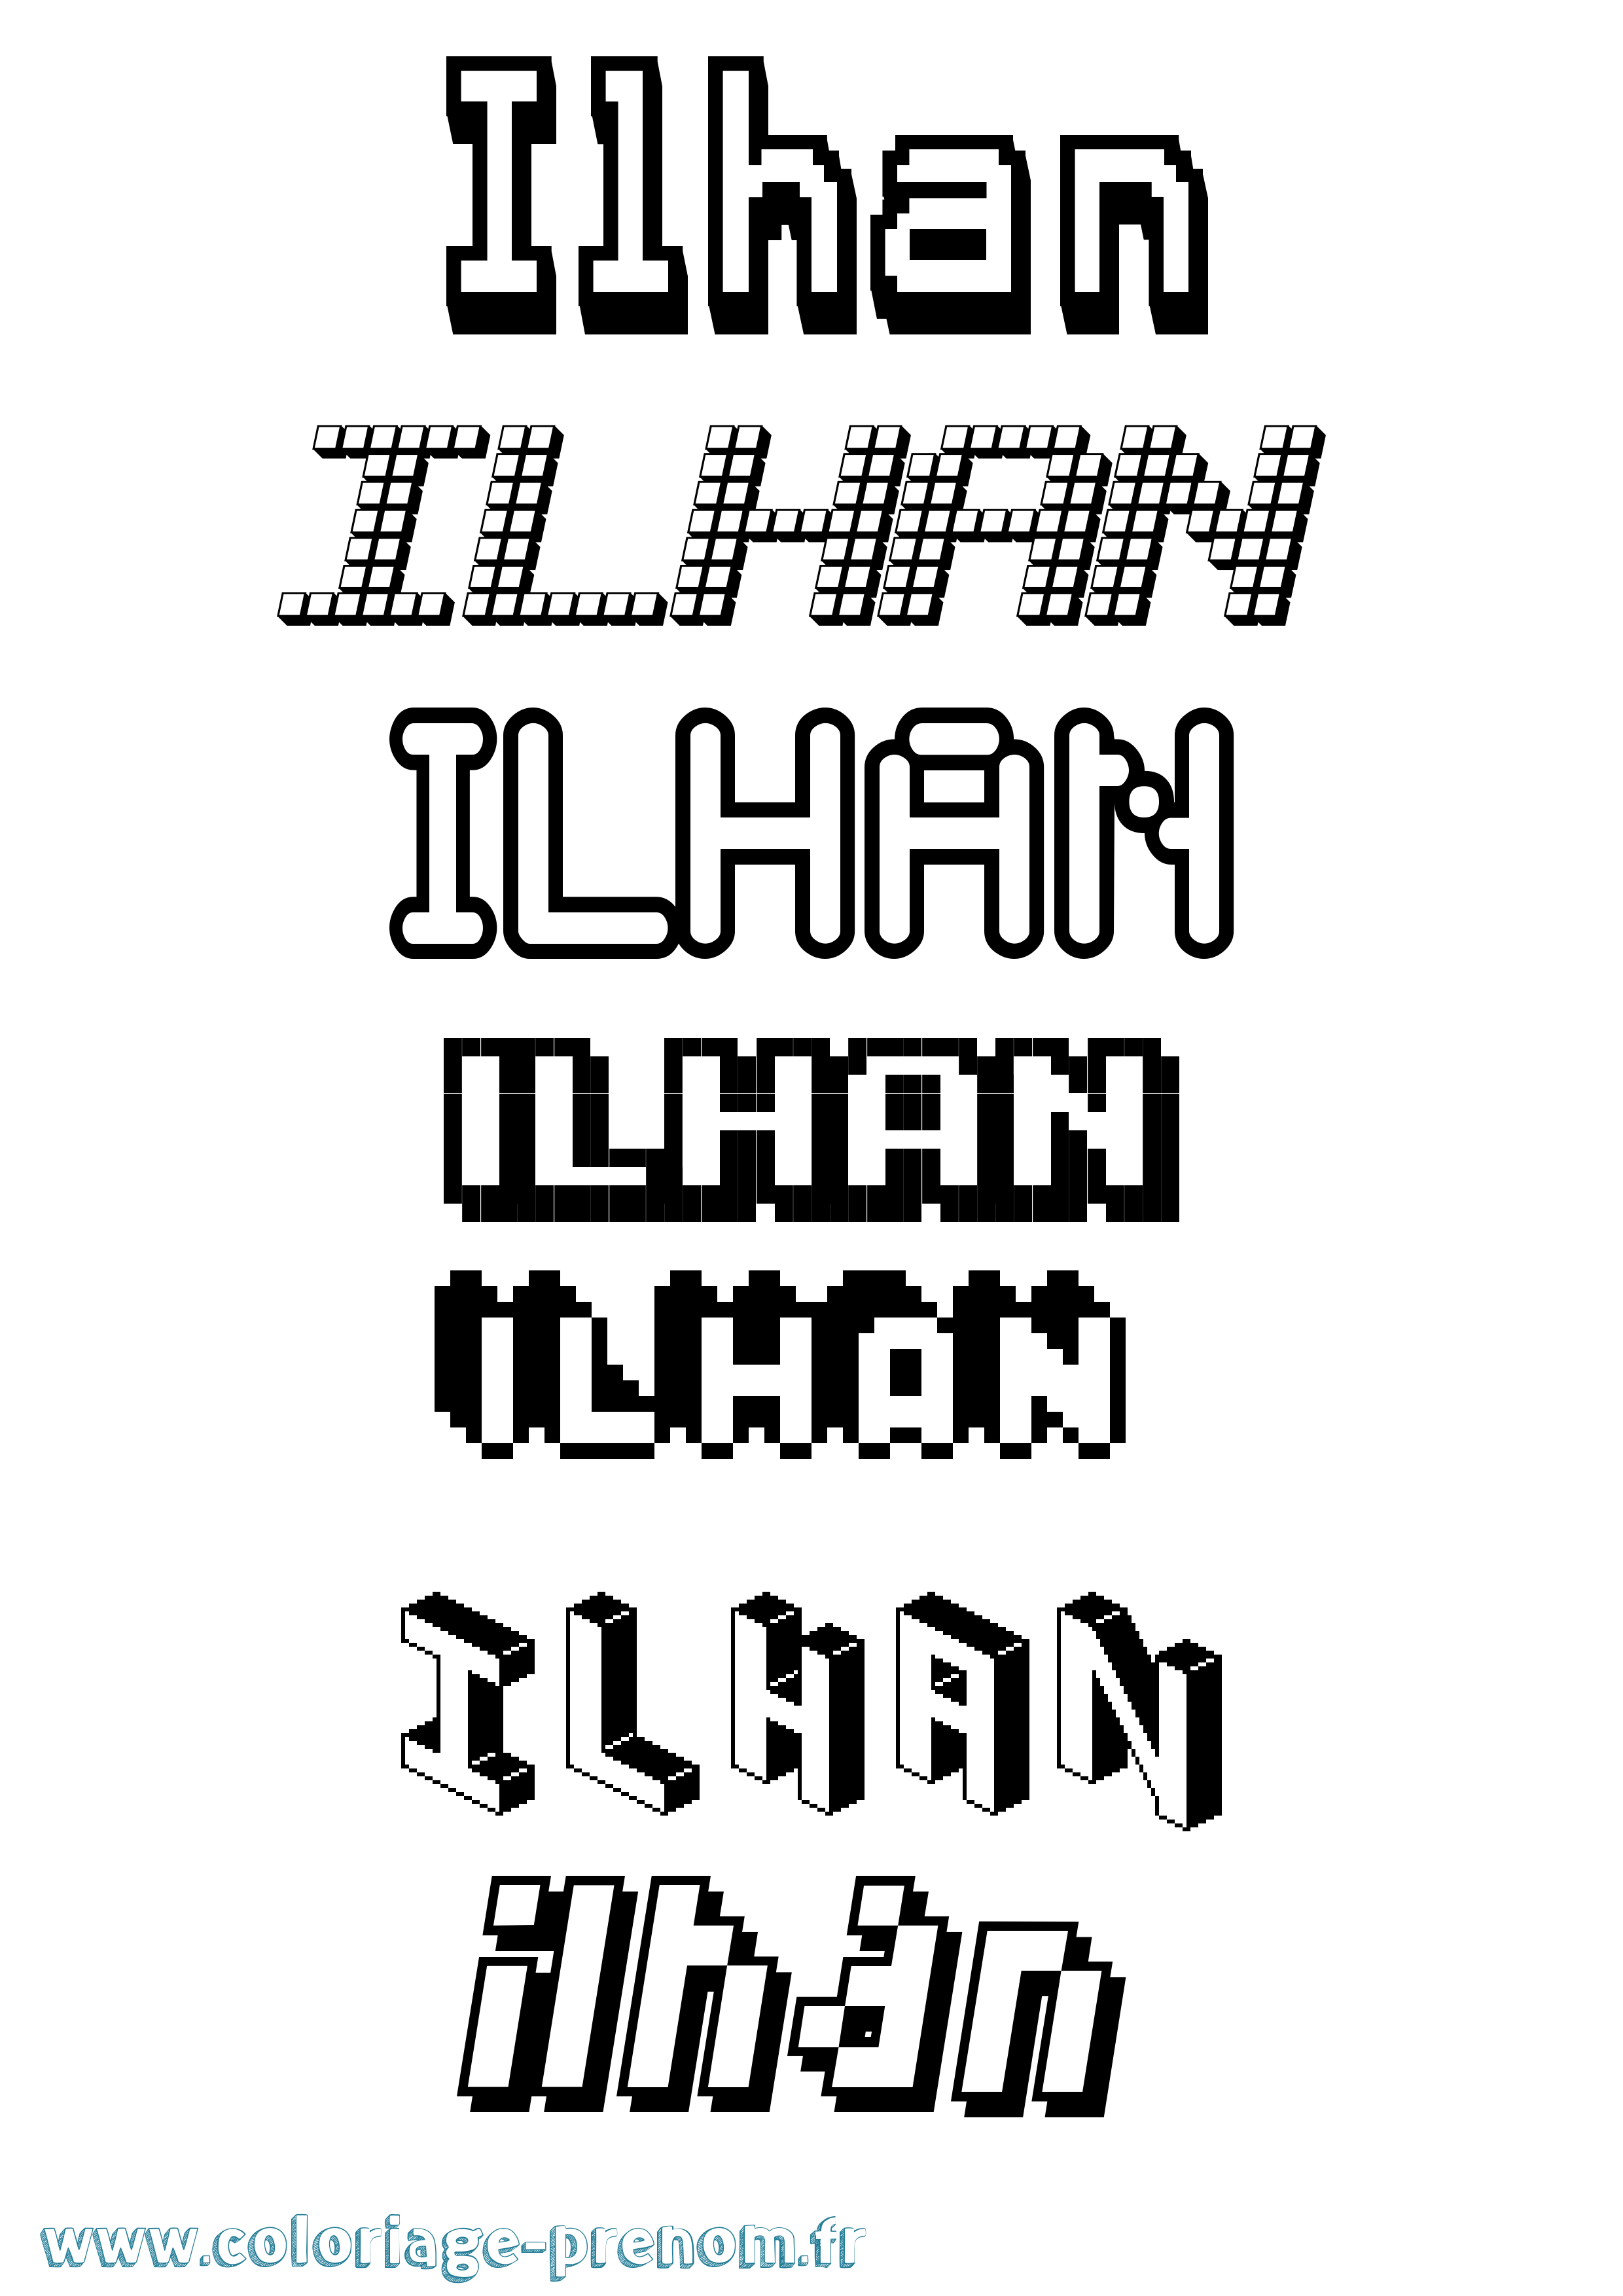 Coloriage prénom Ilhan